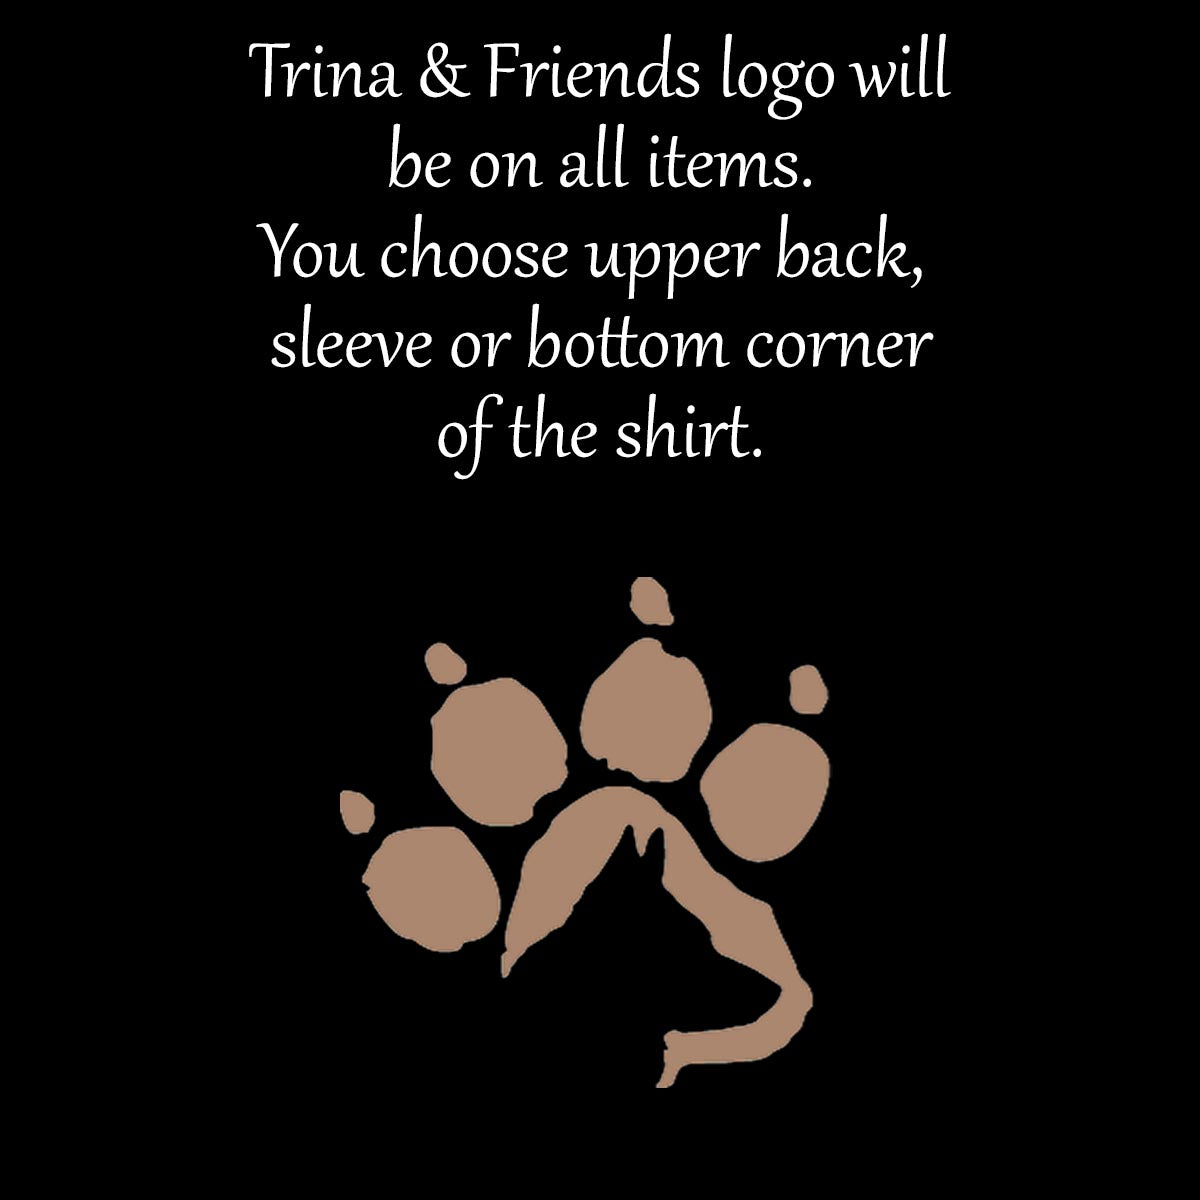 Trina & Friends design 4 raglan shirt